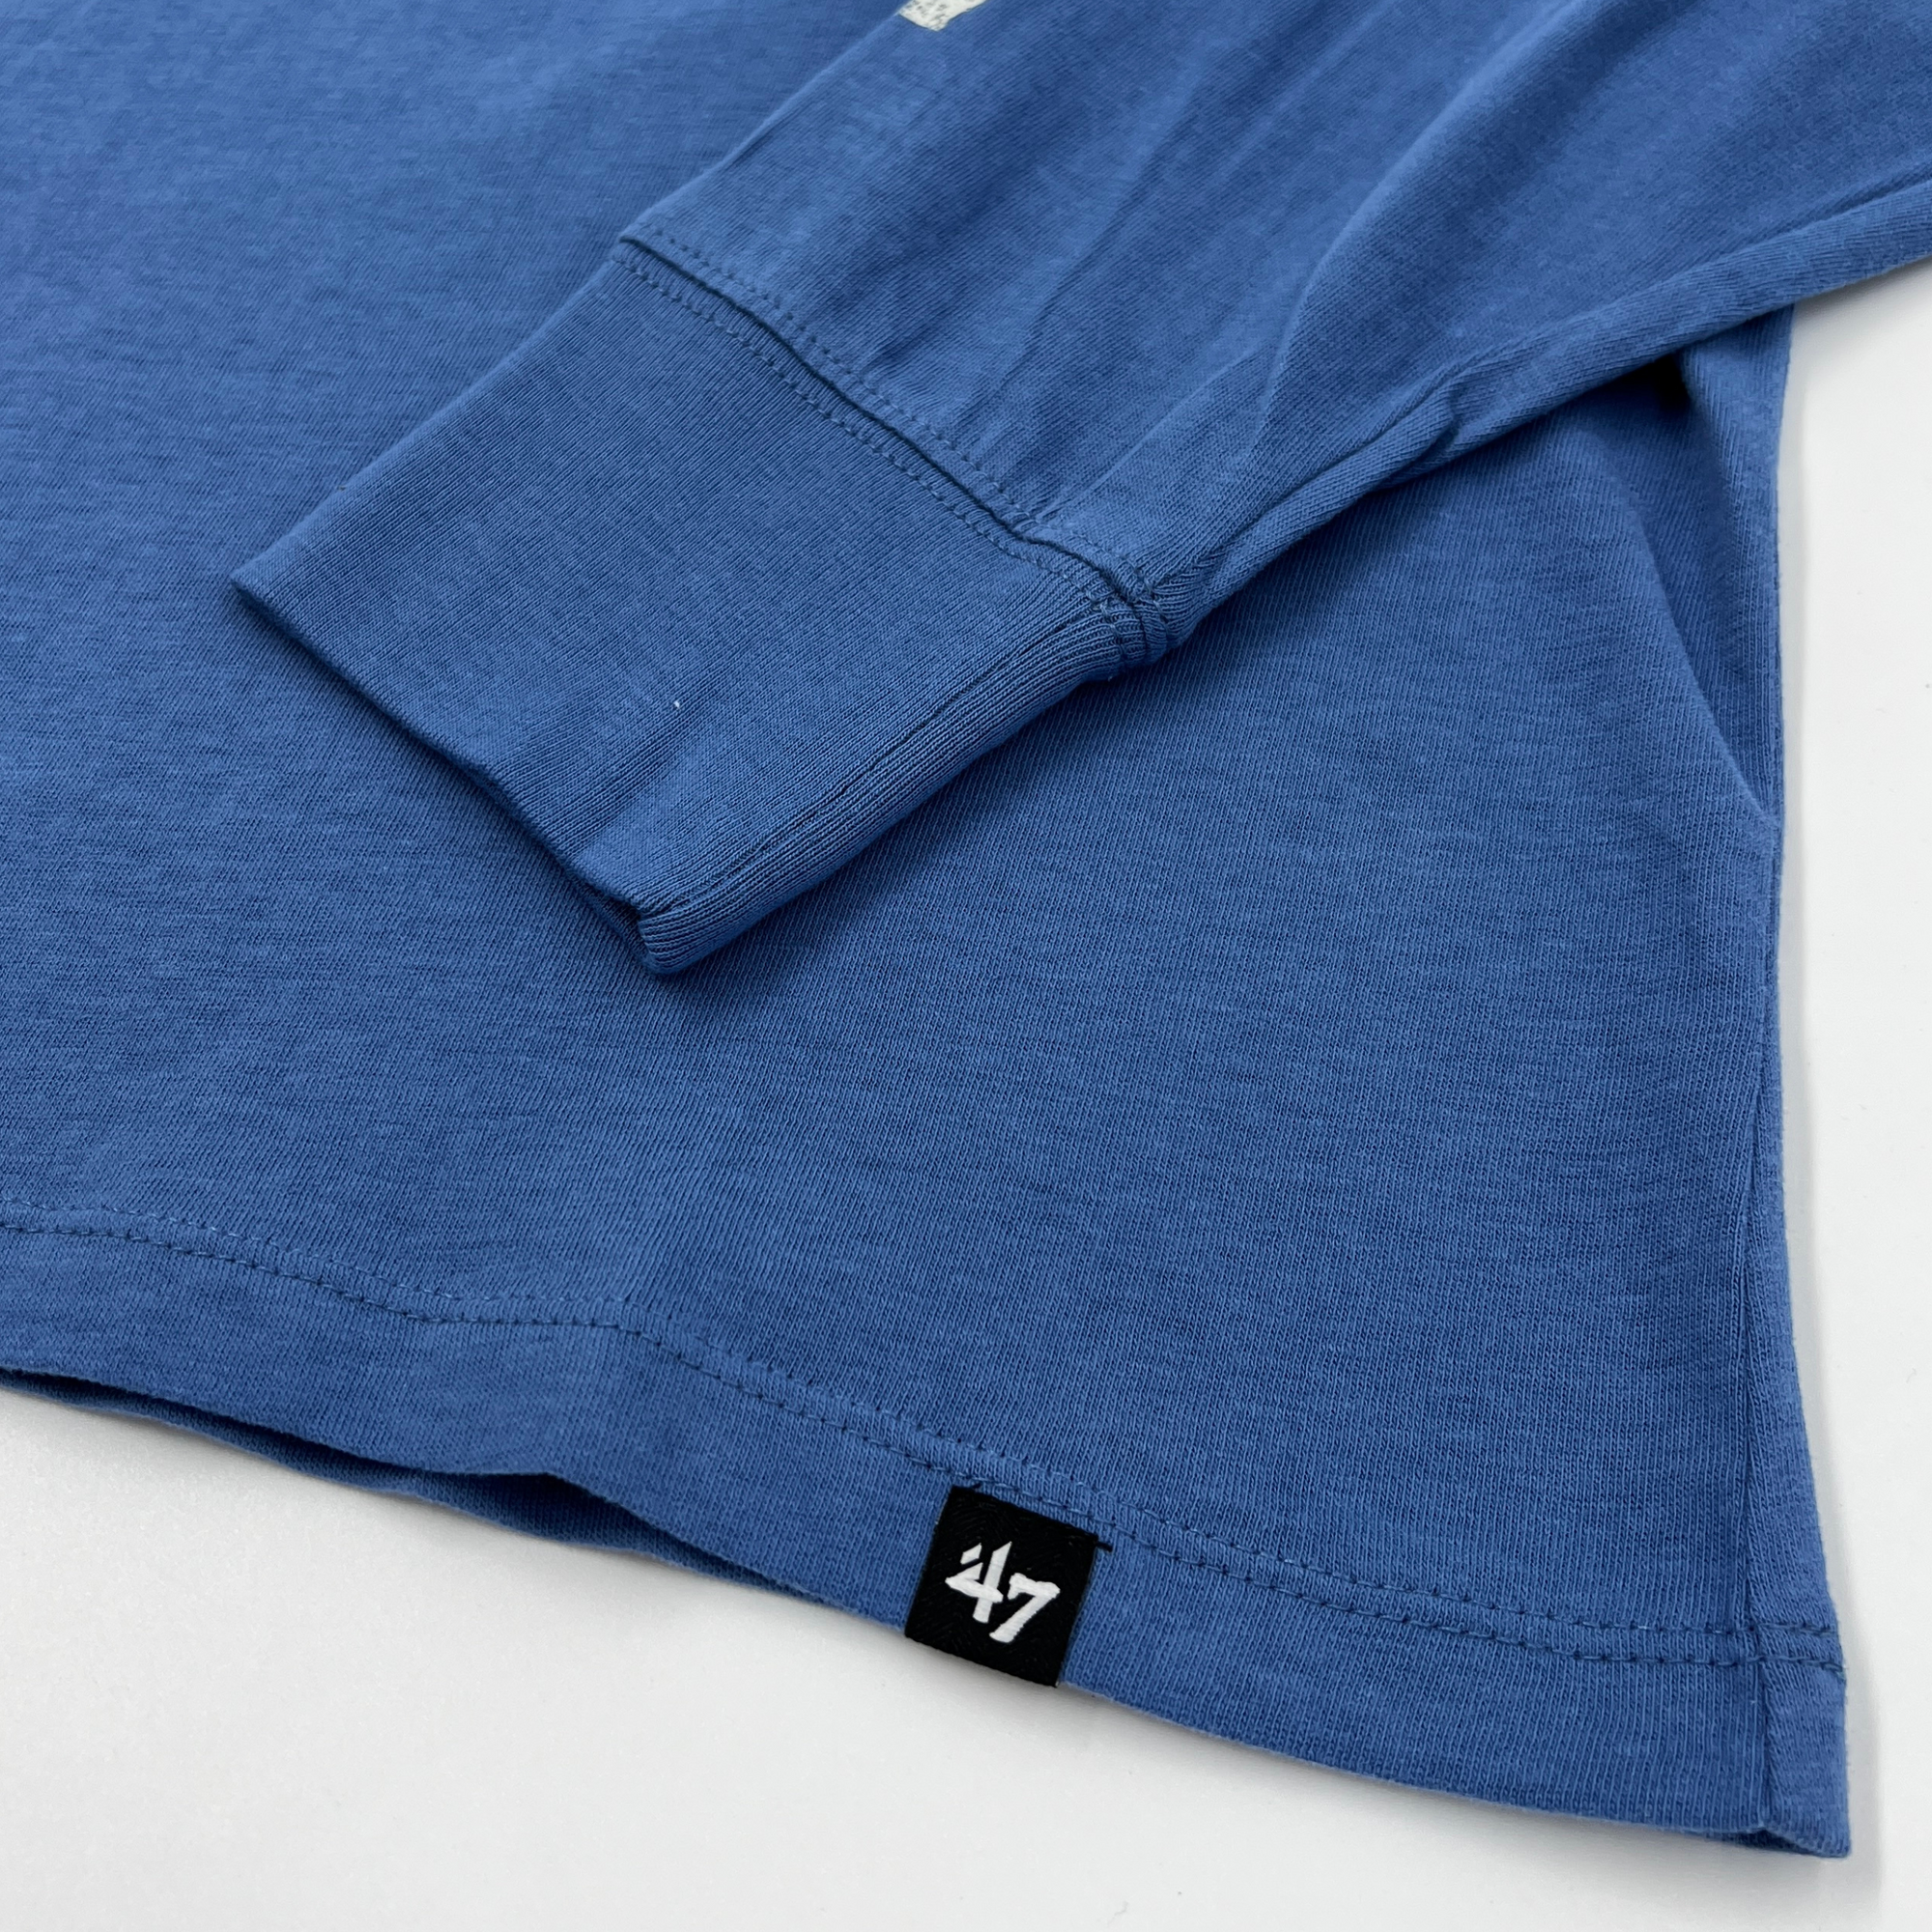 &#39;47 Brand Bills Cadet Blue With Retro Logo and Sleeve Print Long Sleeve